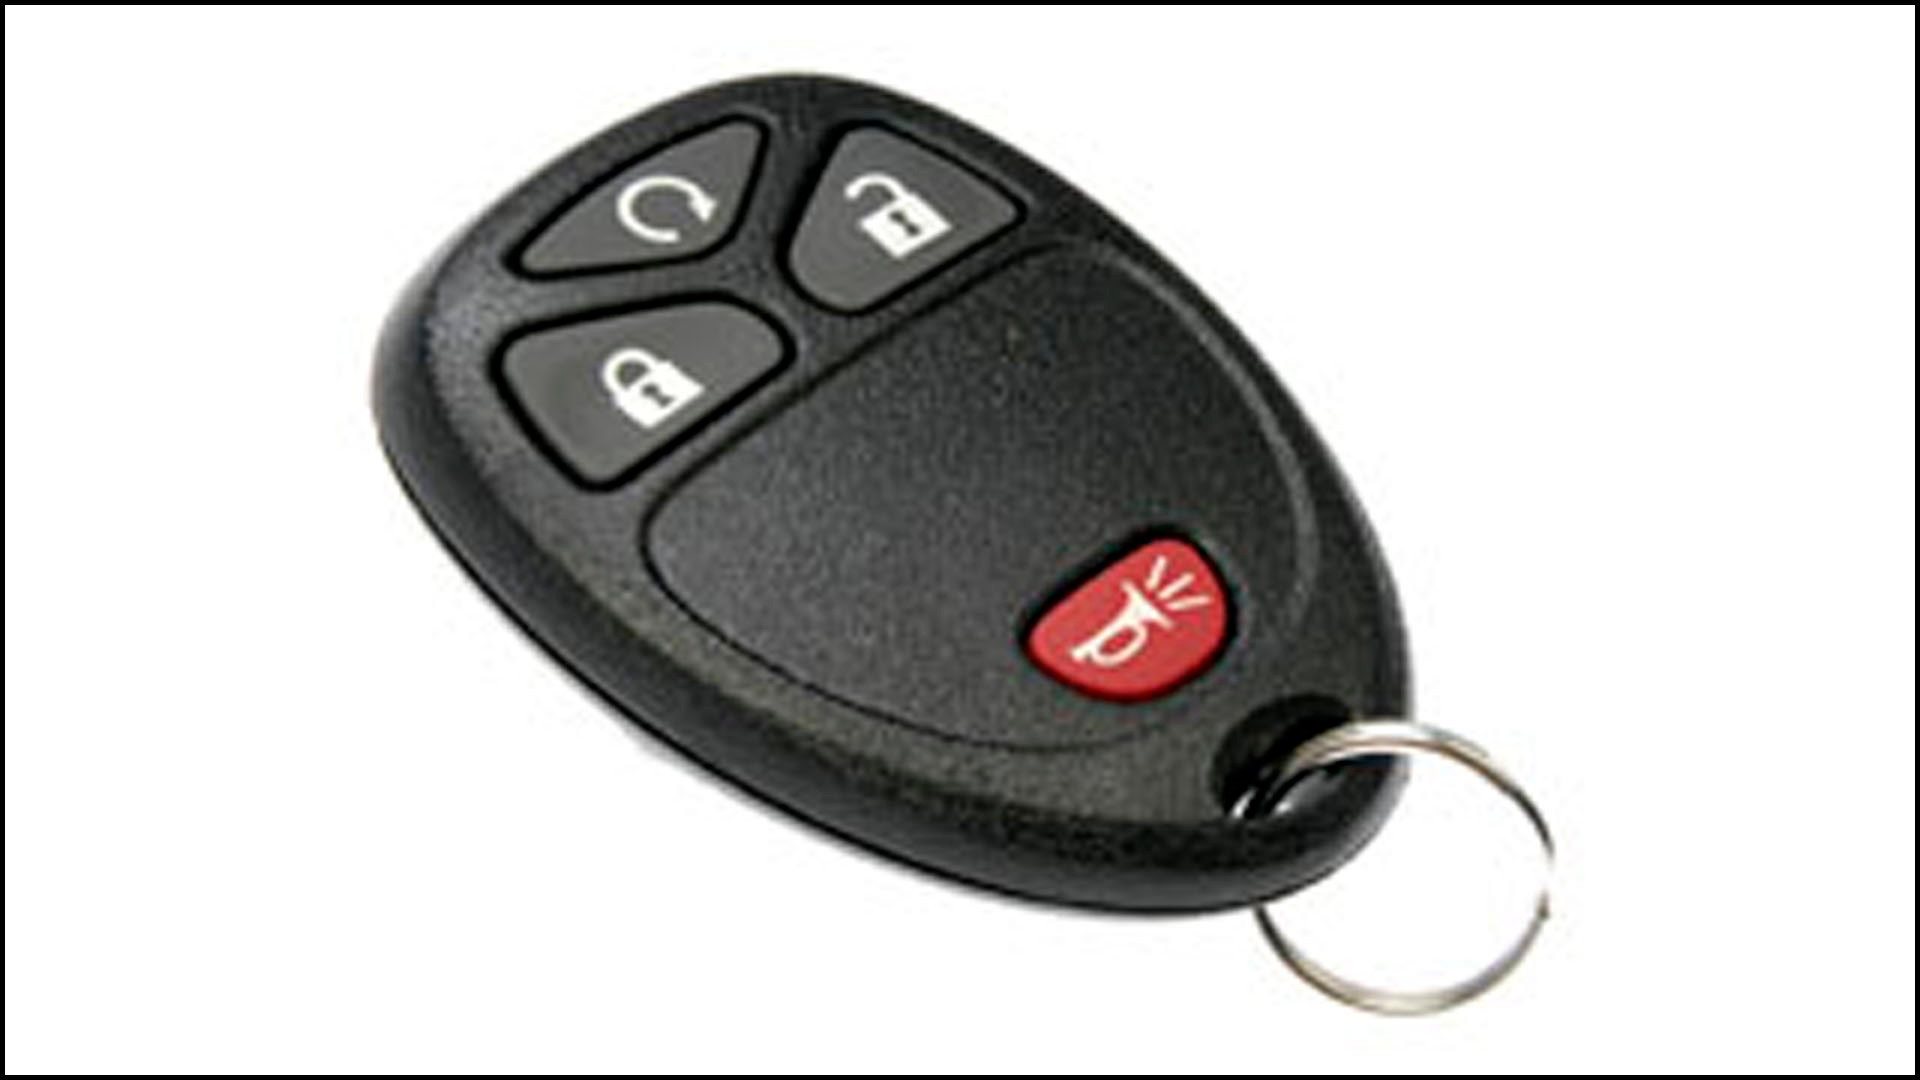 Chevrolet Silverado How to Install Remote Start/Alarm Chevroletforum